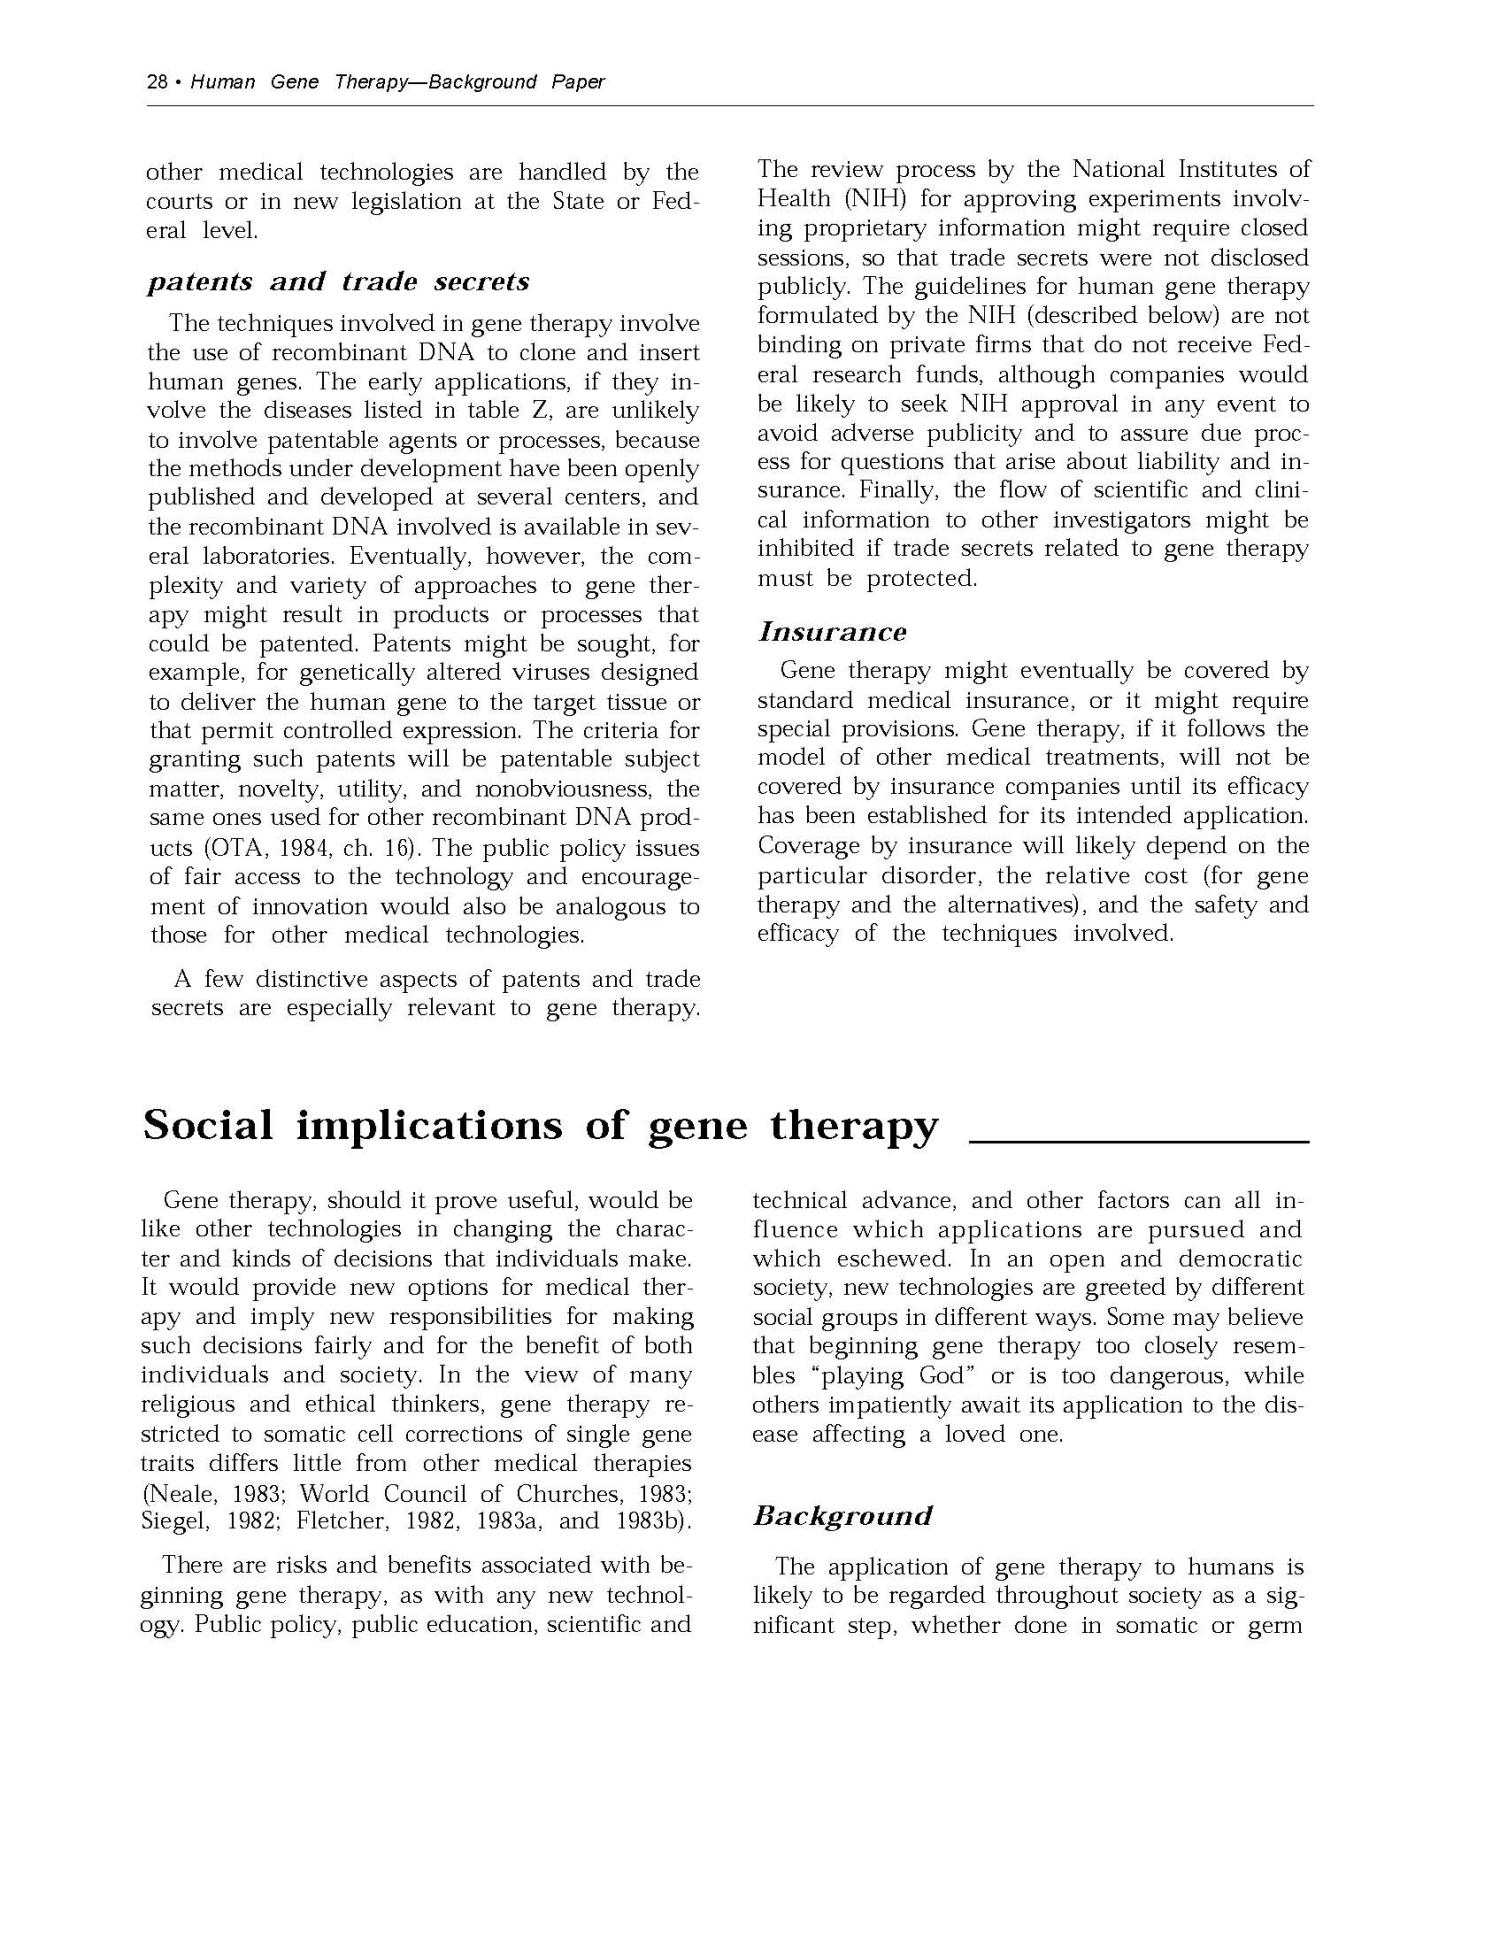 Human Gene Therapy Essay